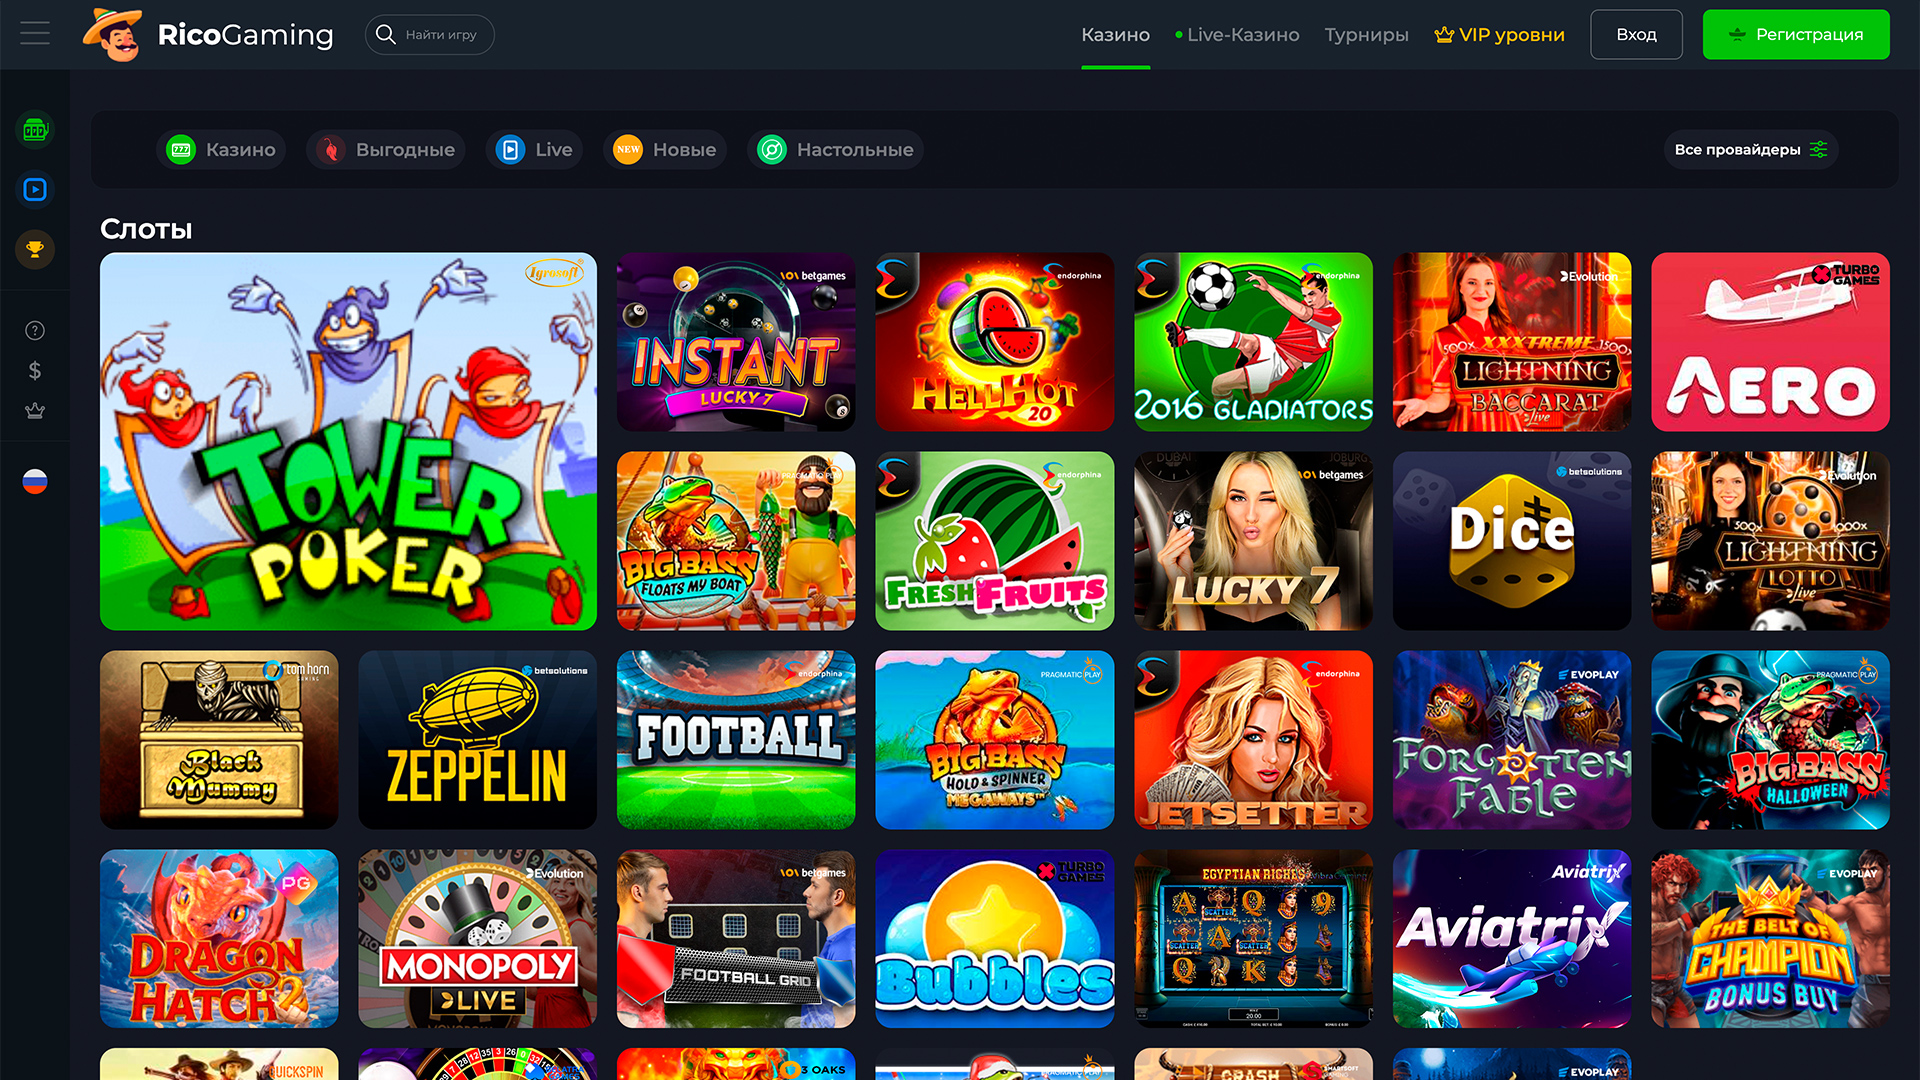 Online Casino RicoGaming